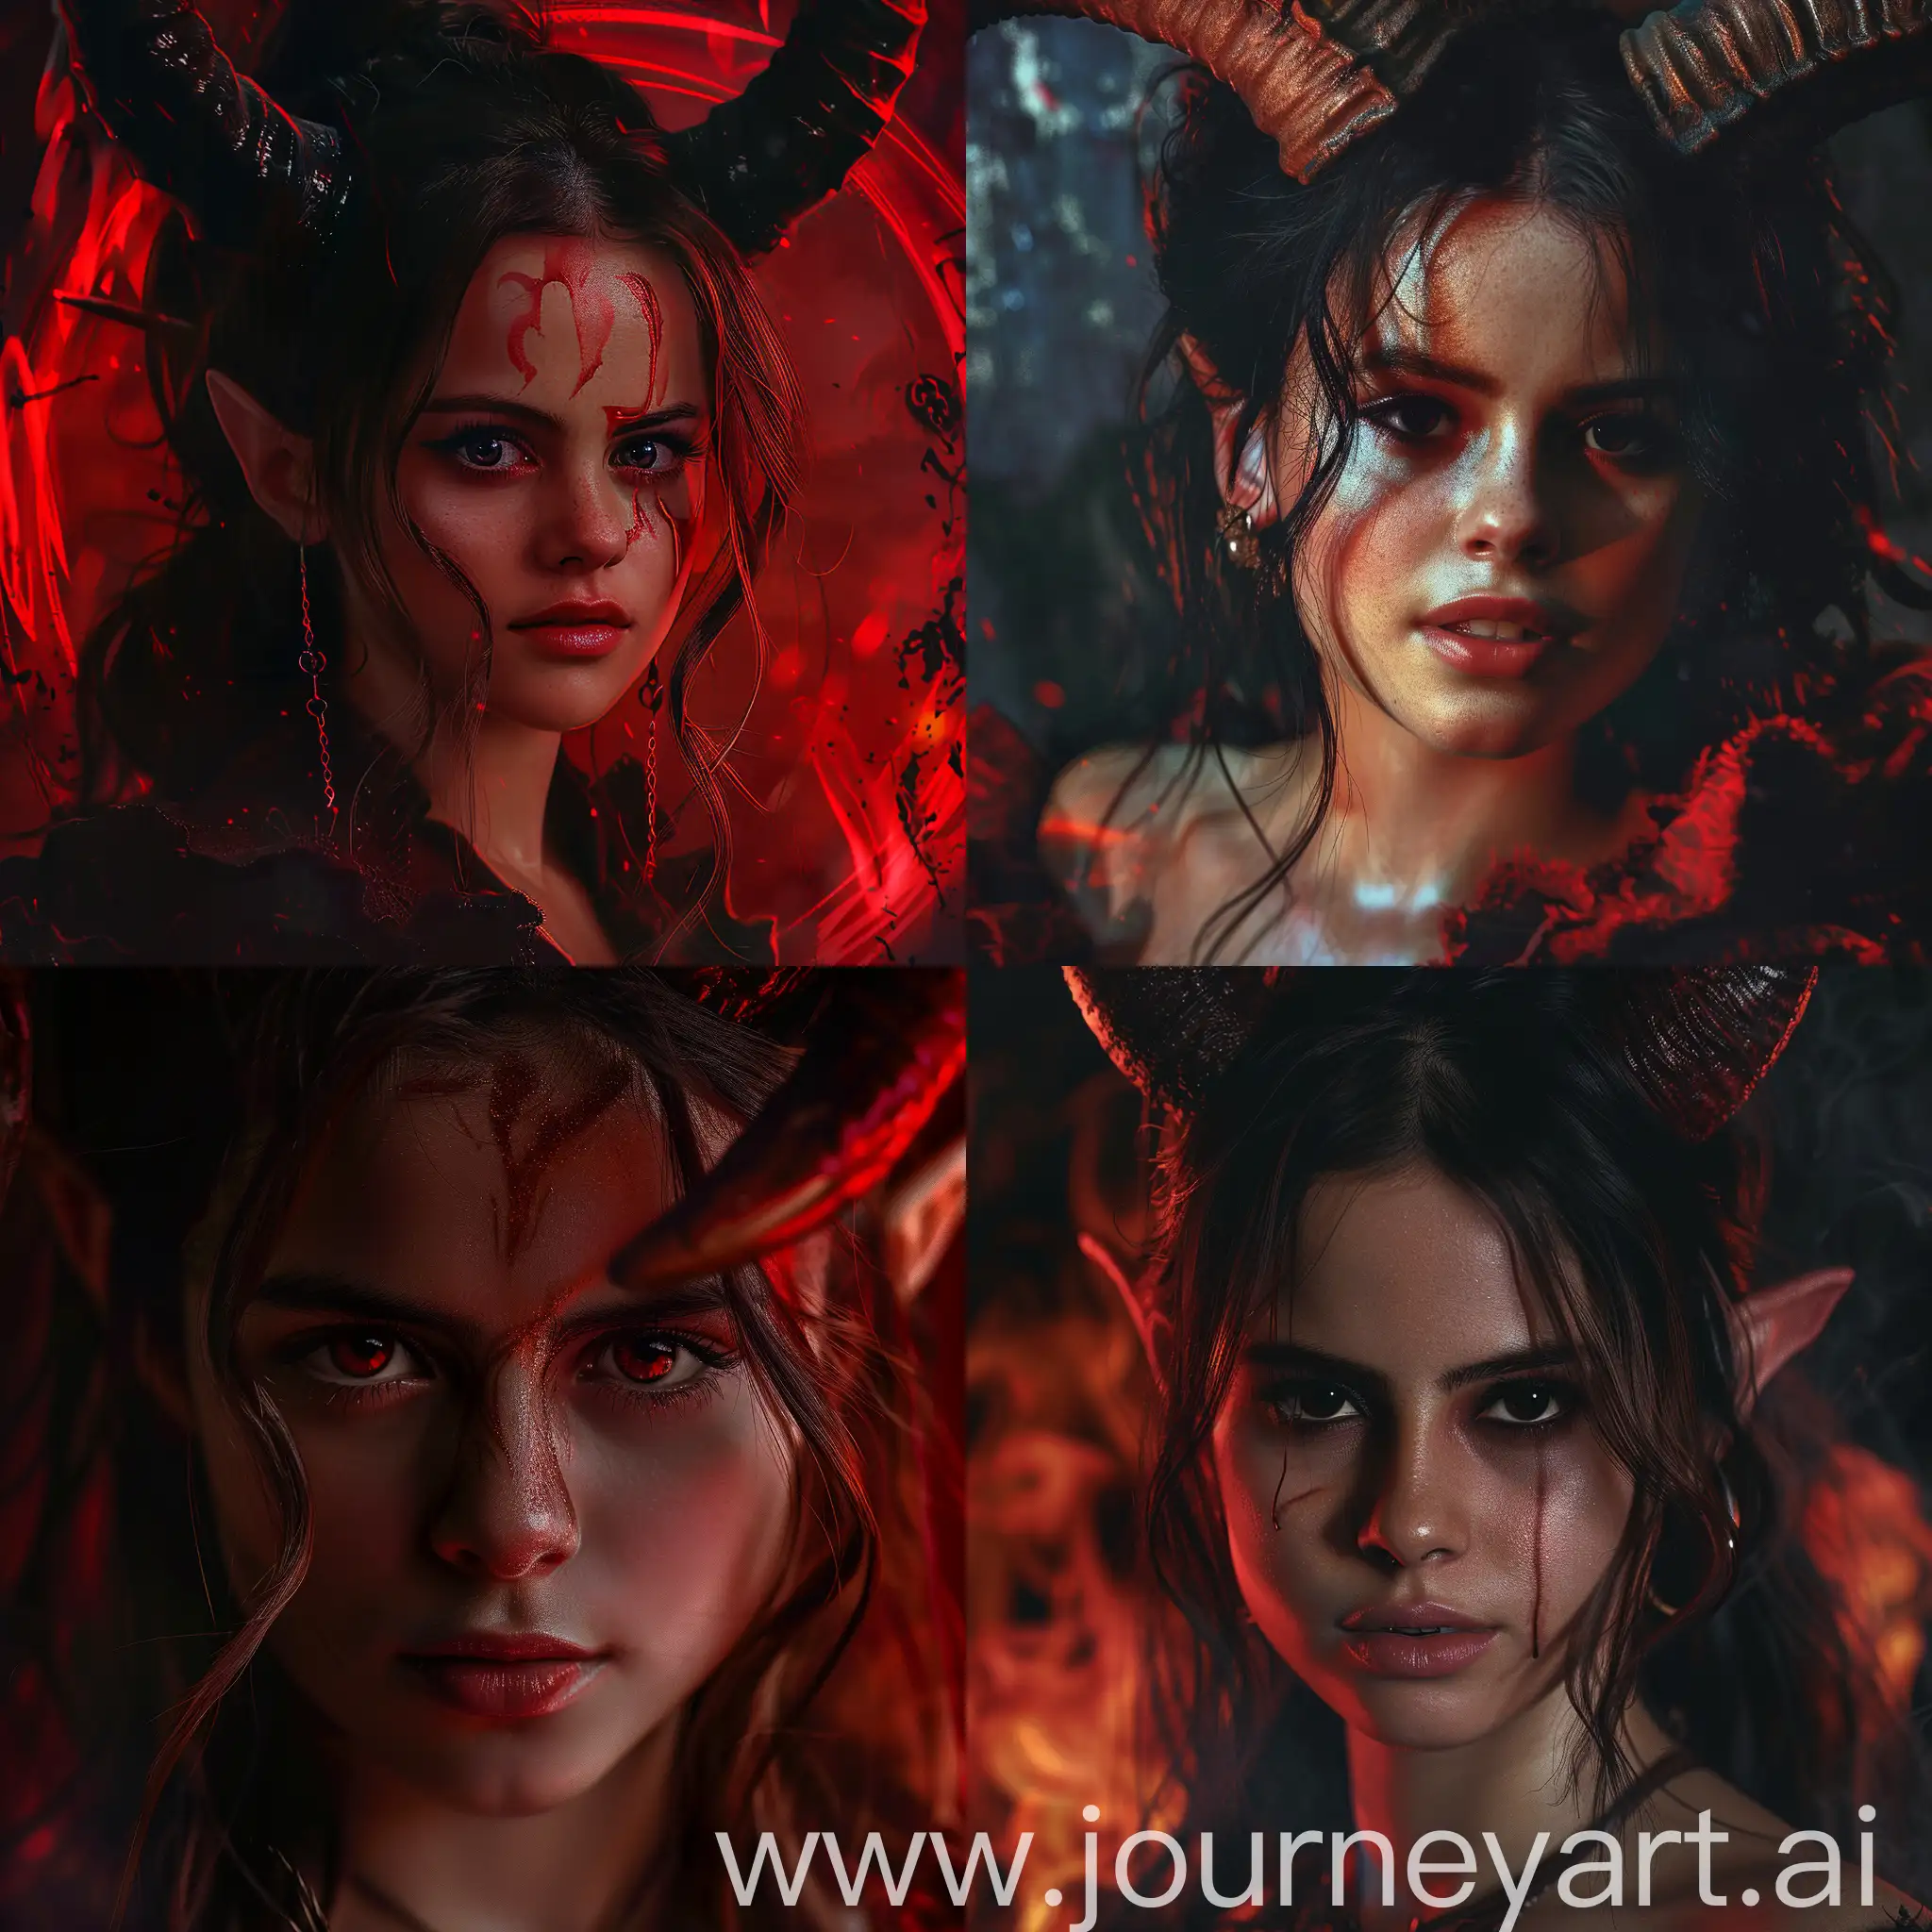 Realistic-4K-Portrait-Selena-Gomez-Transformed-into-a-Demon